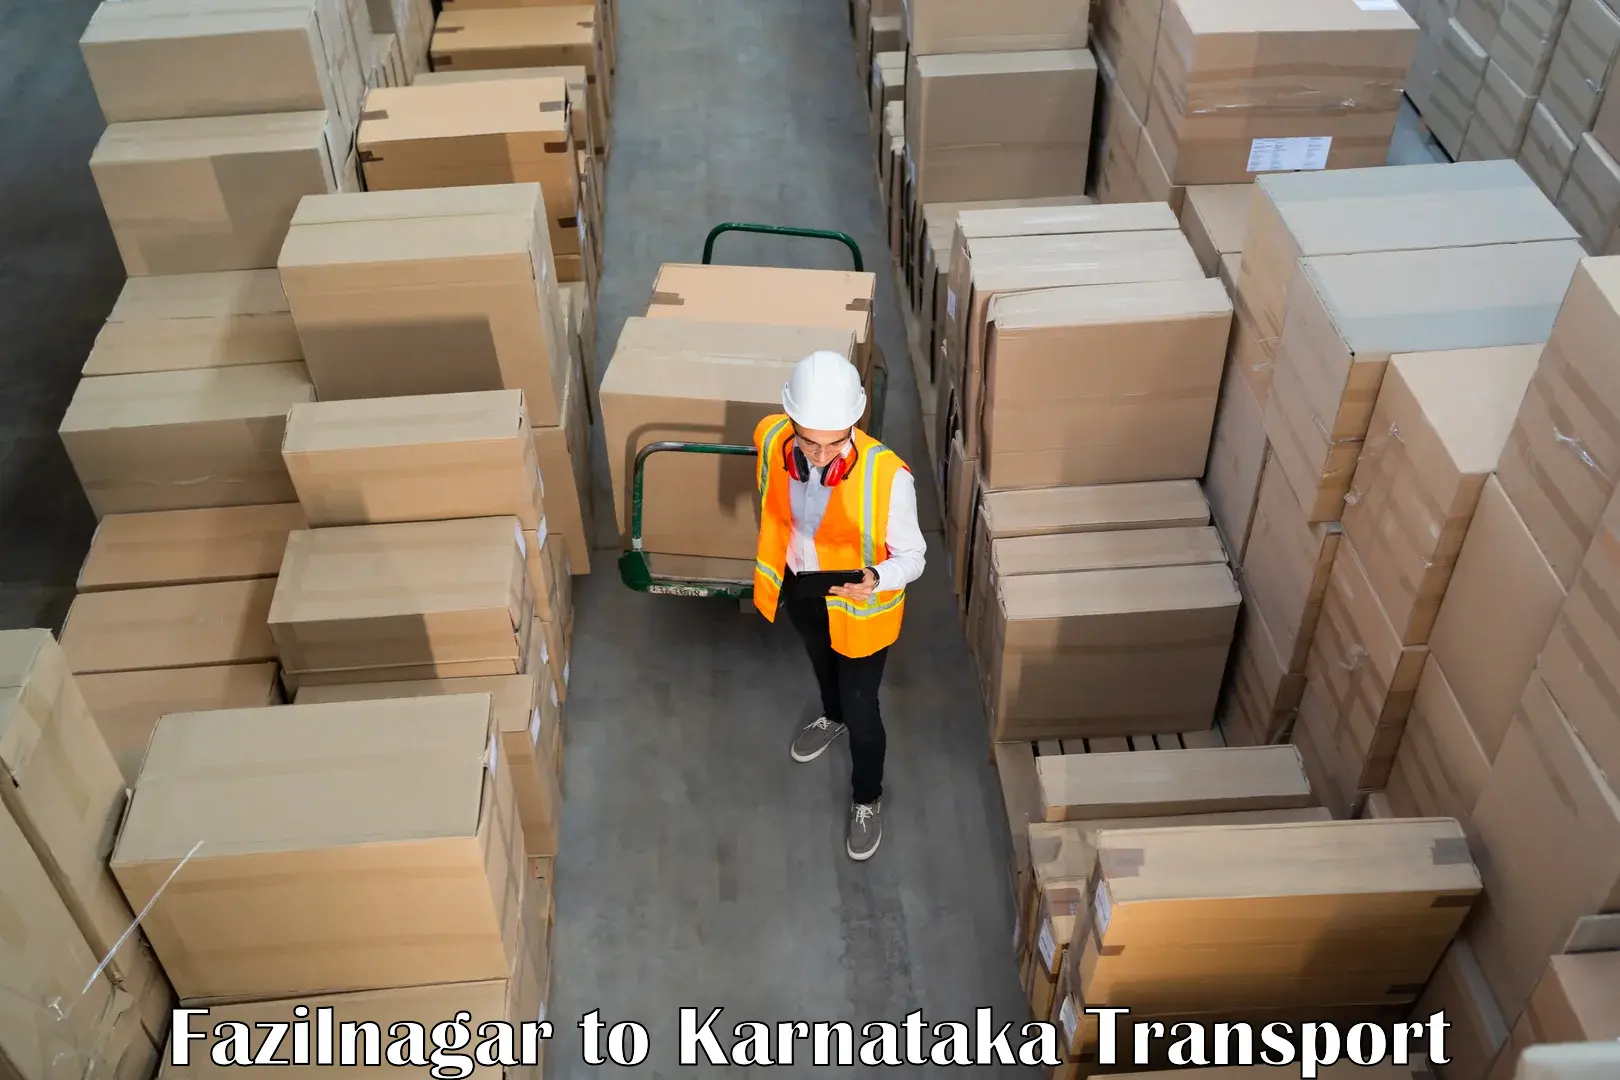 Shipping partner Fazilnagar to Tavarekere